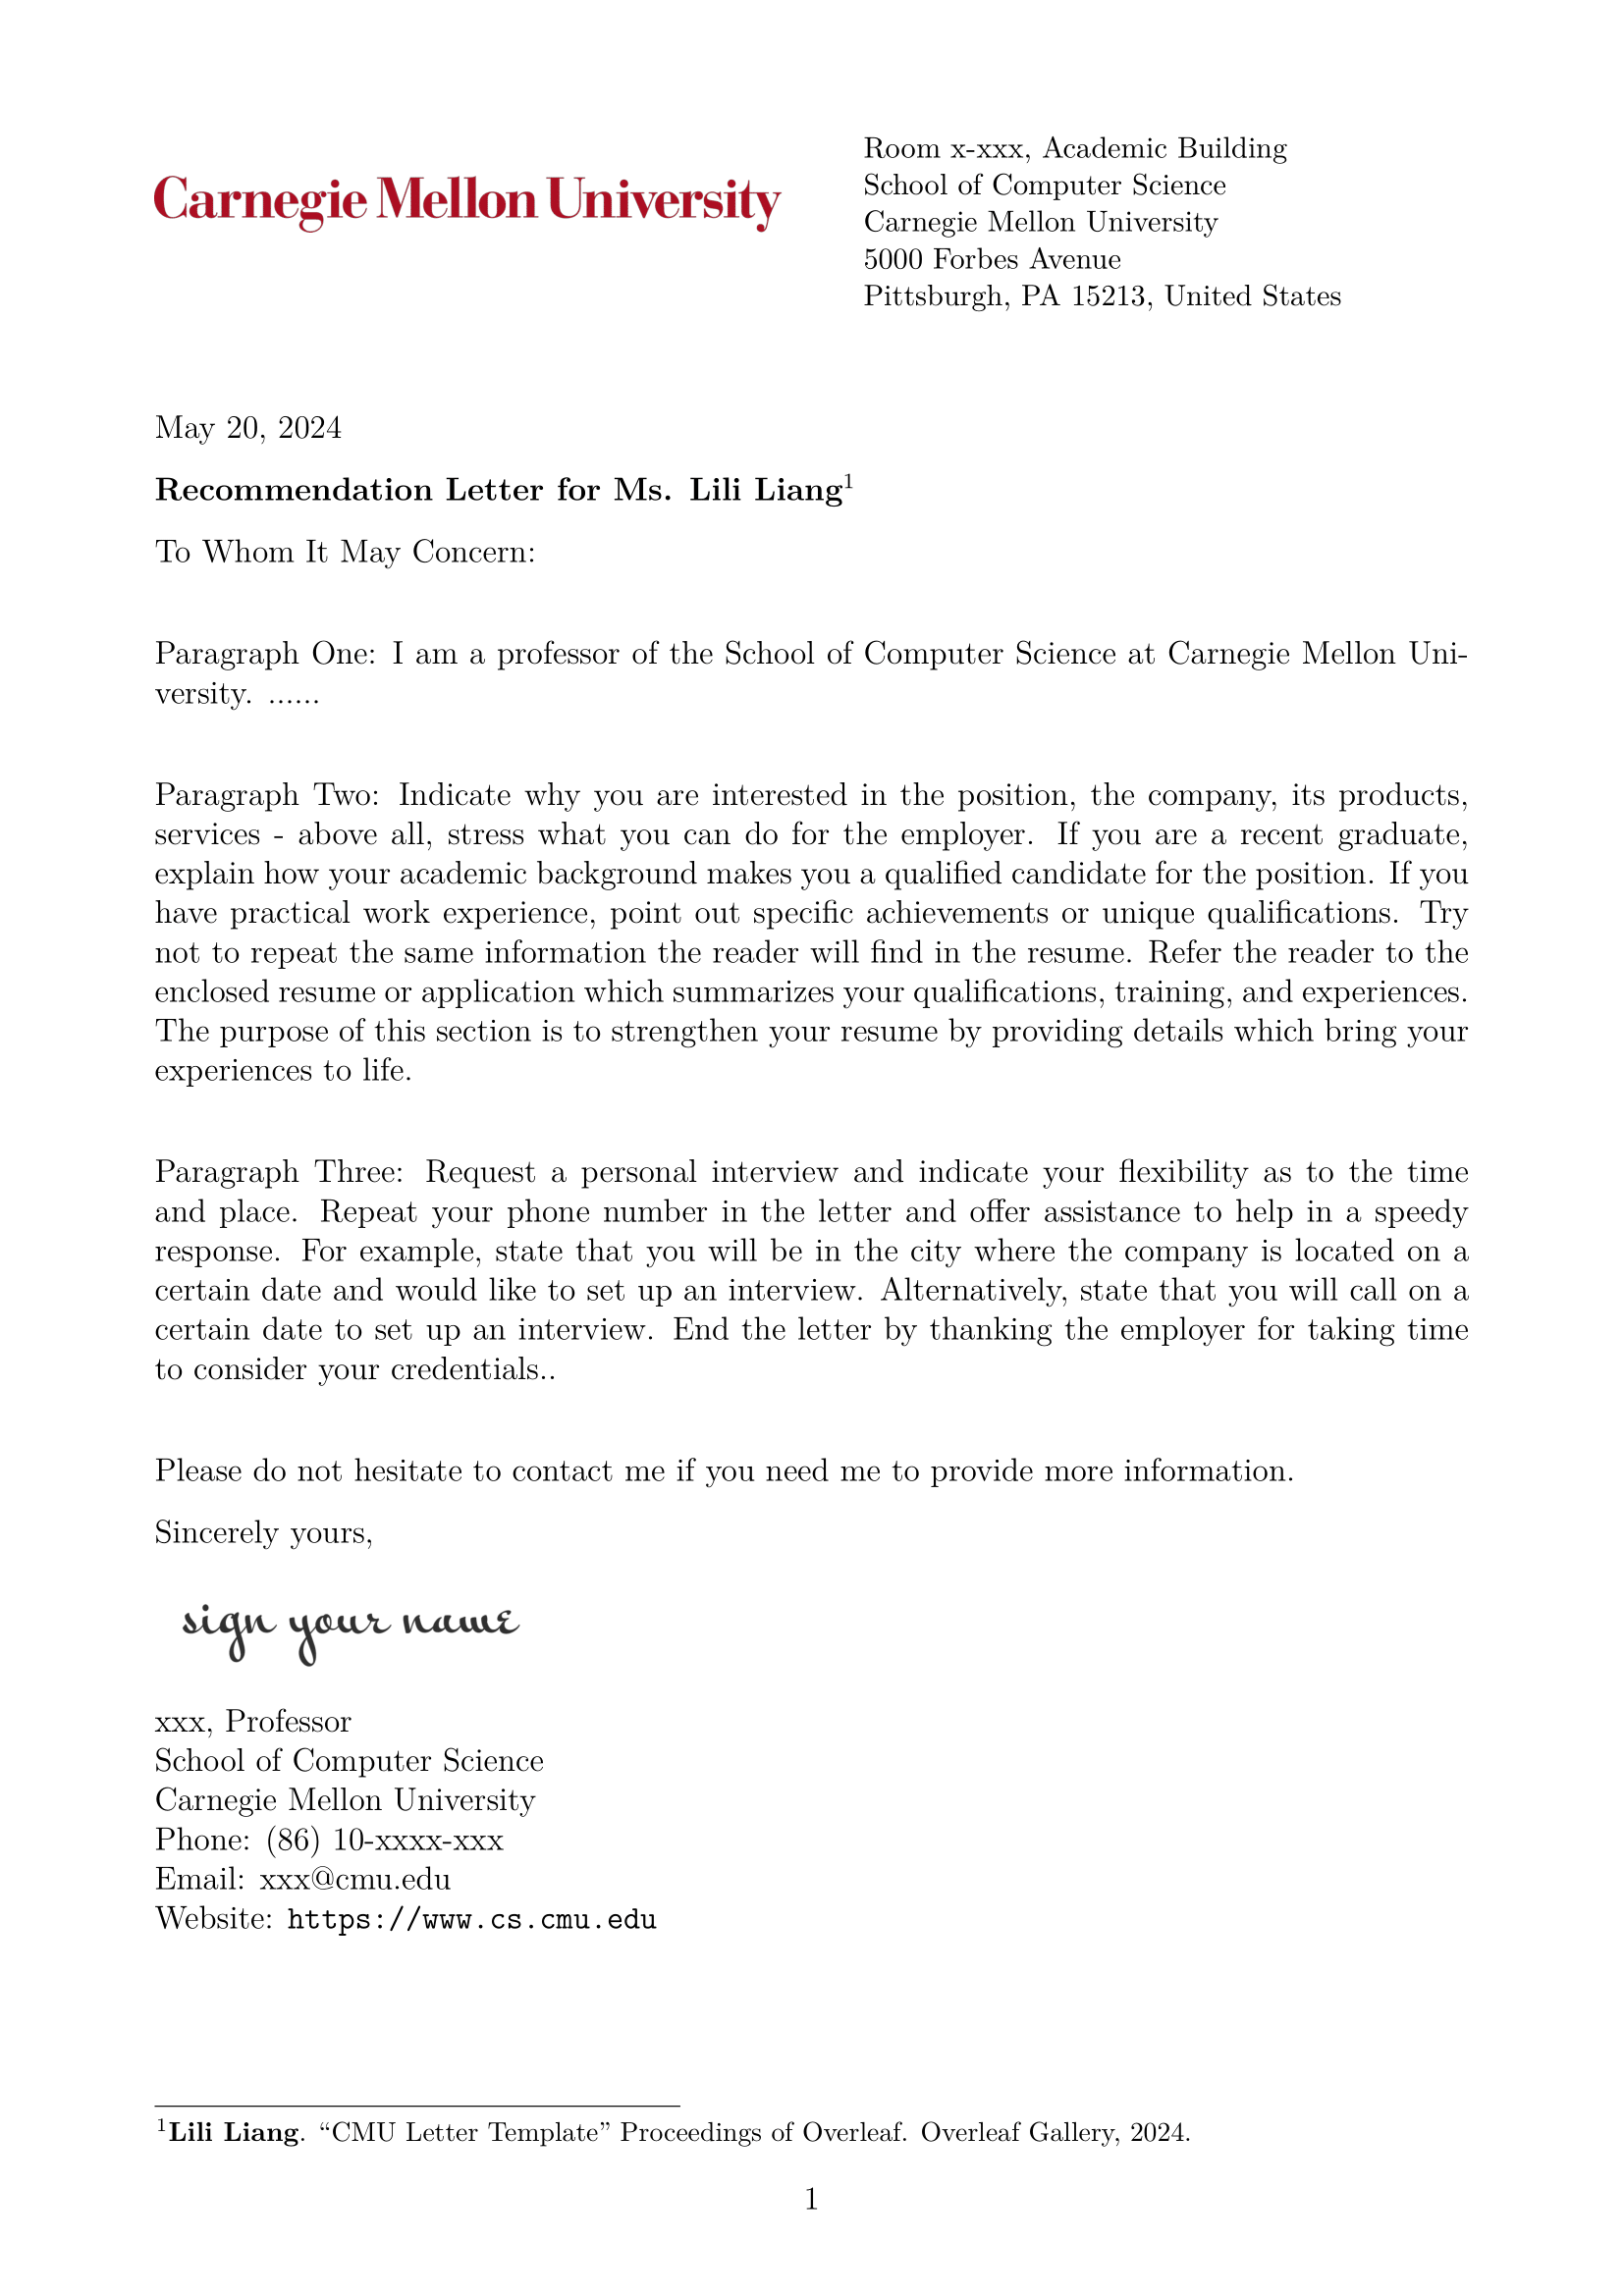 CMU-Letter